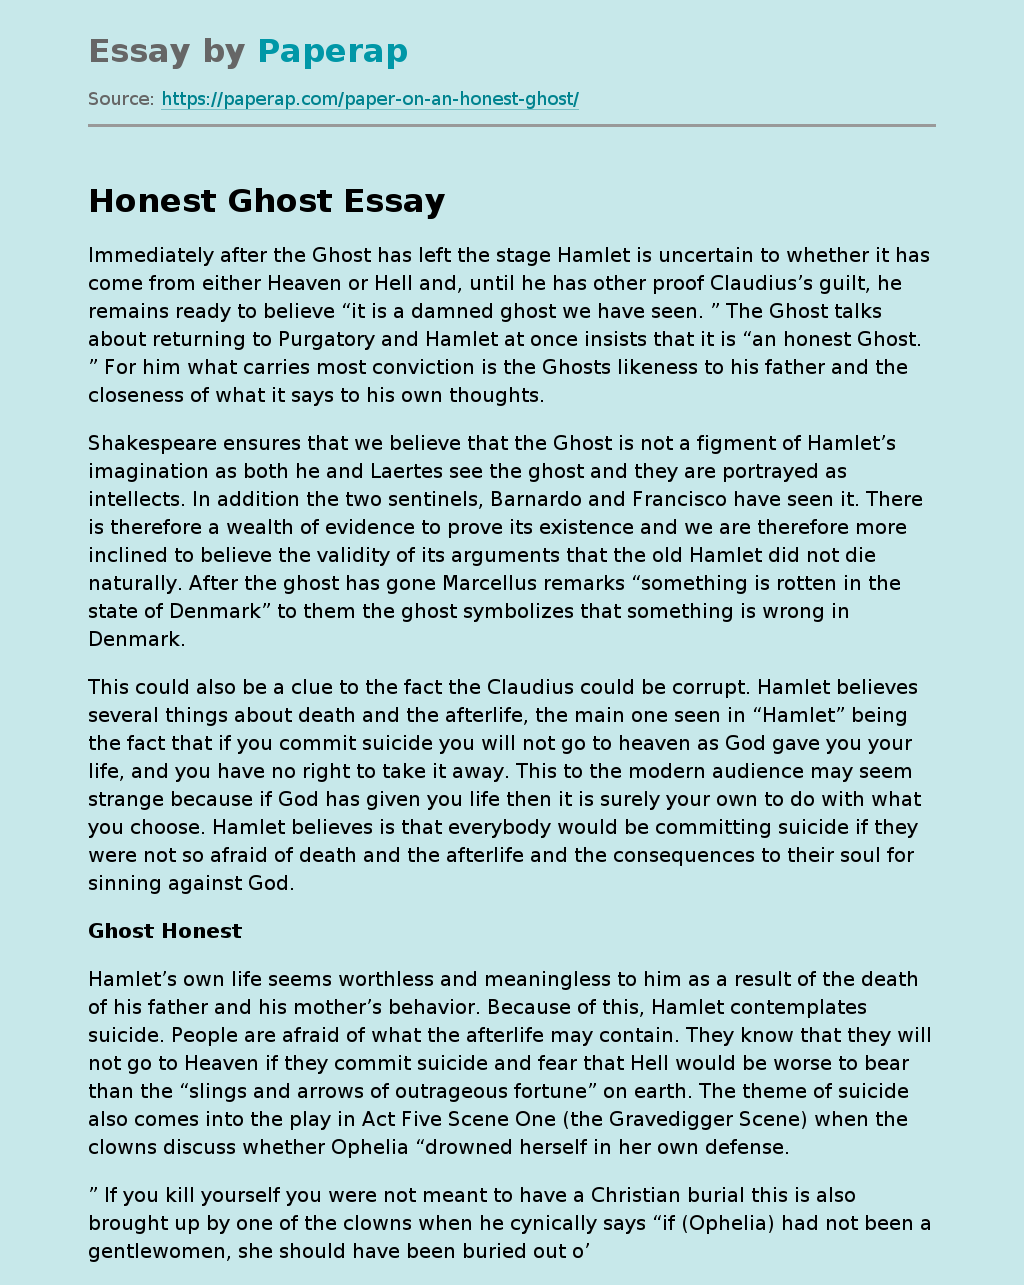 Honest Ghost "Hamlet"